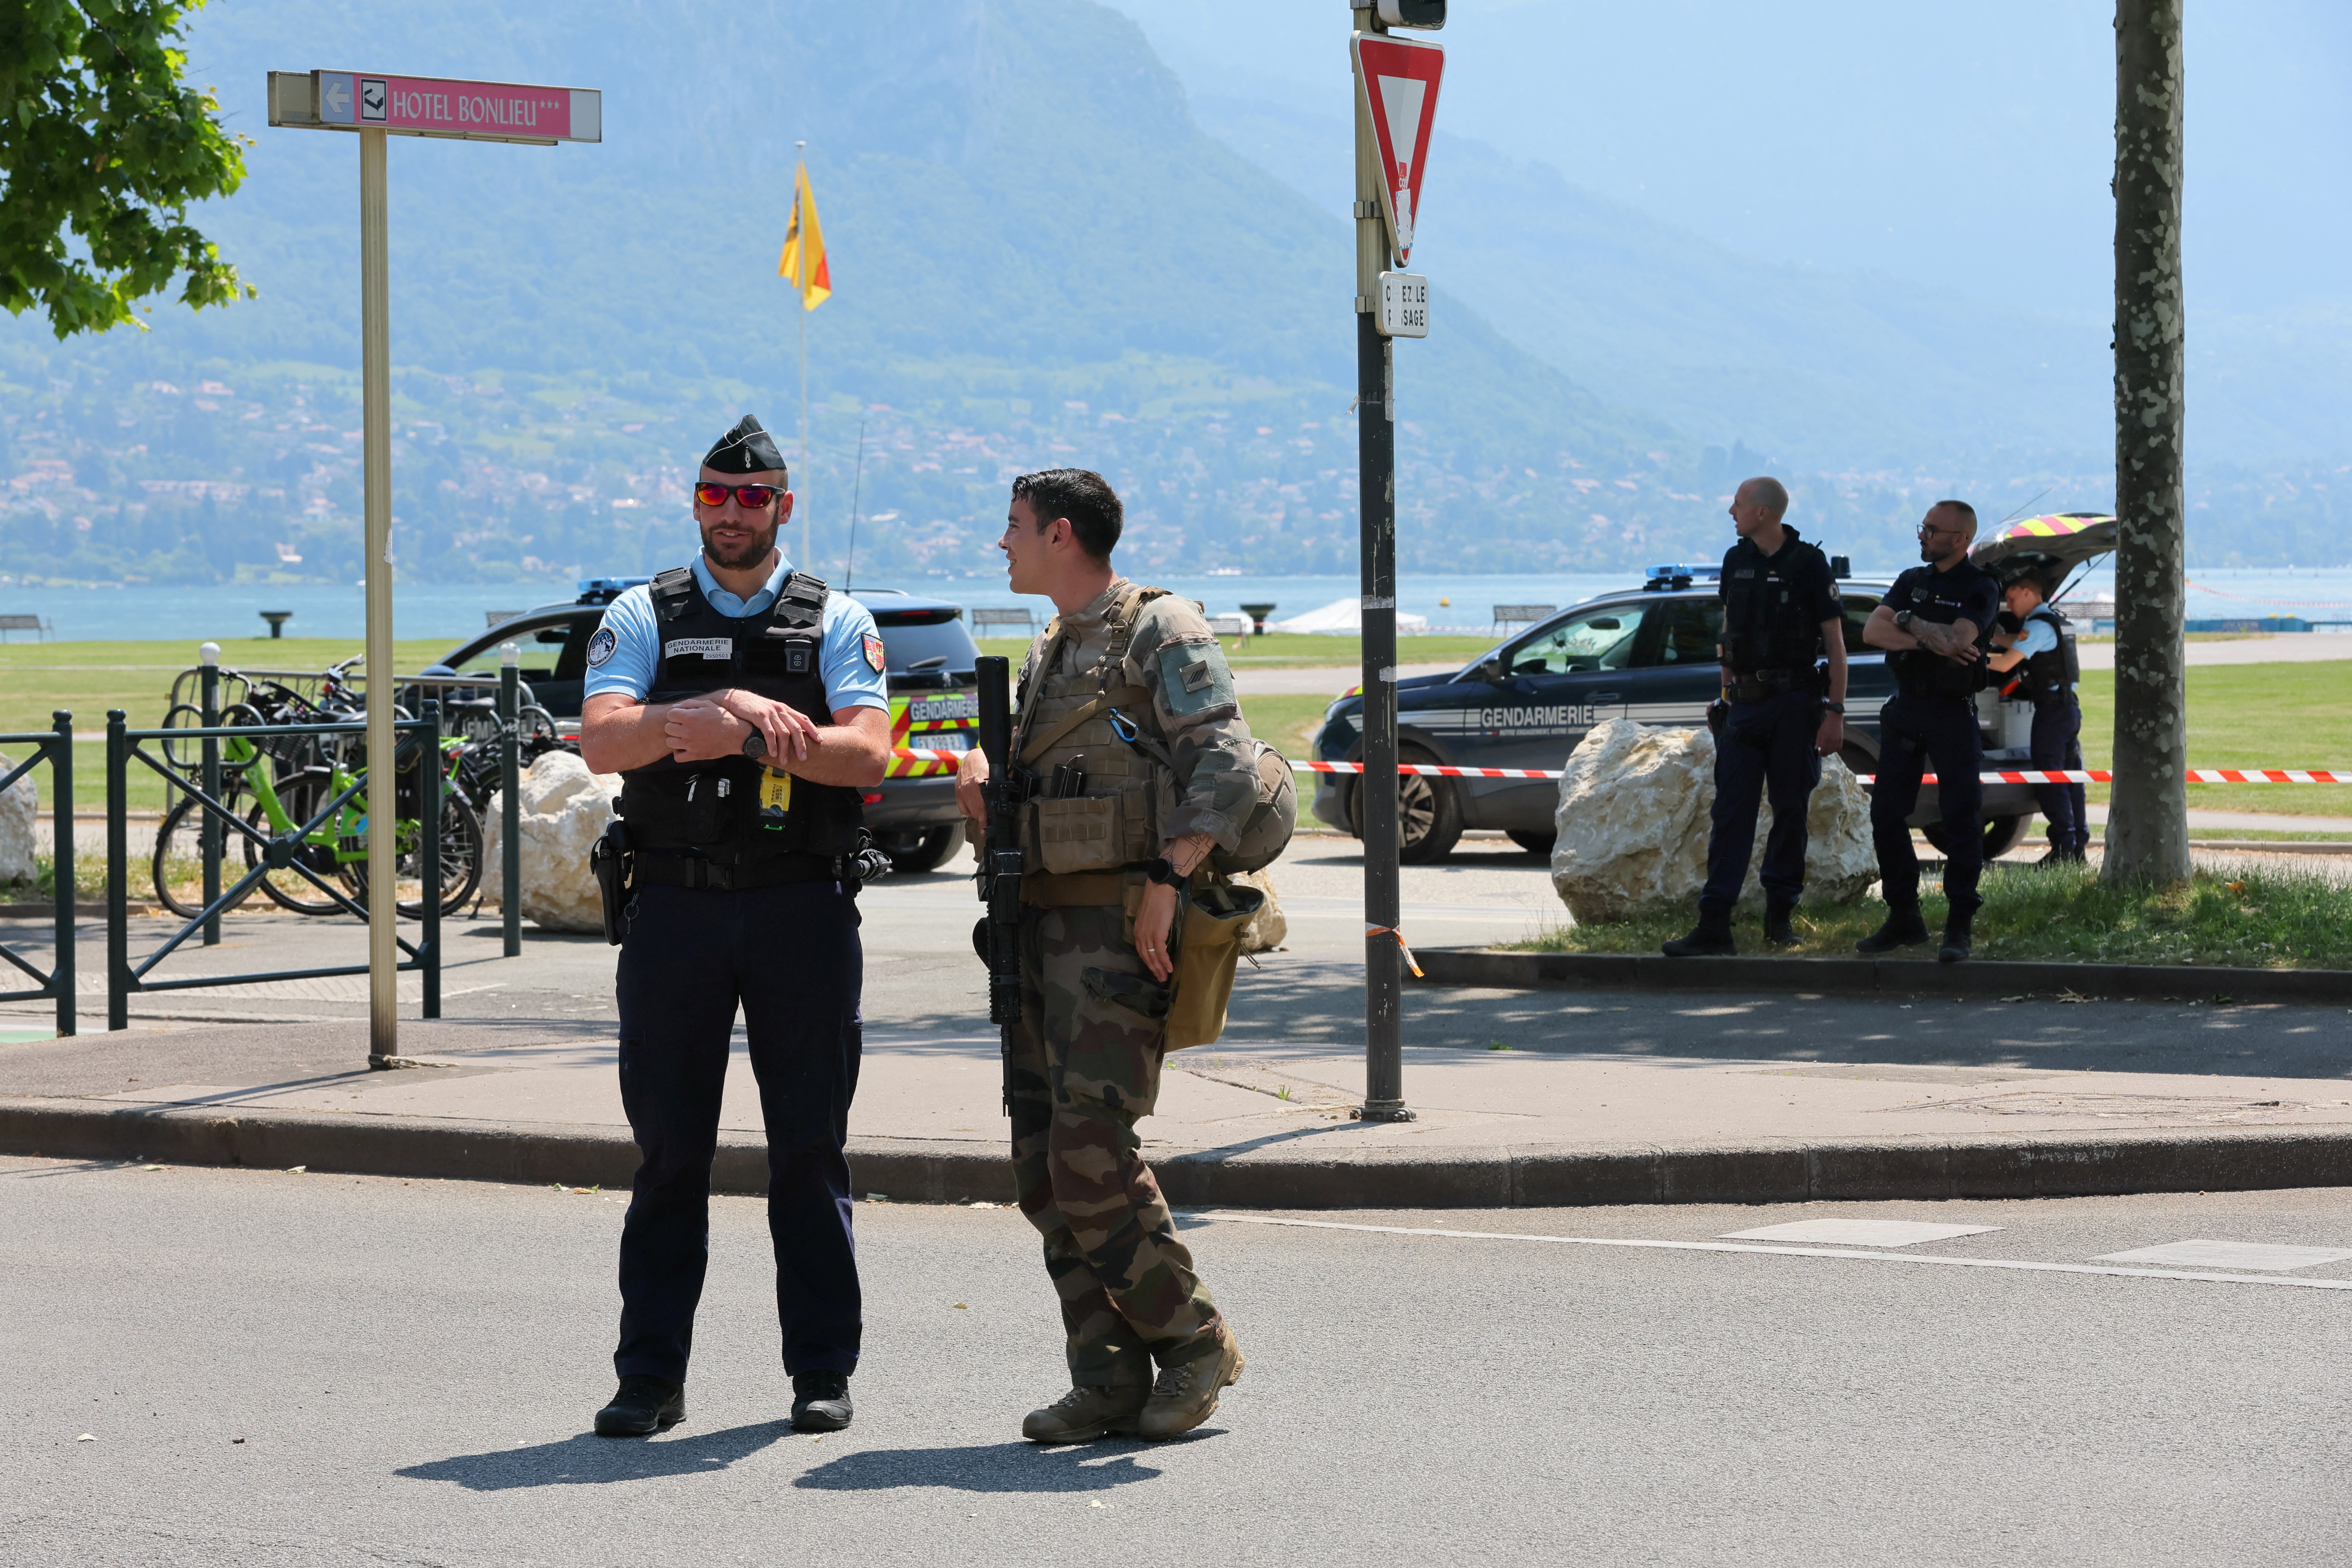 Children injured in knife attack in French alpine town